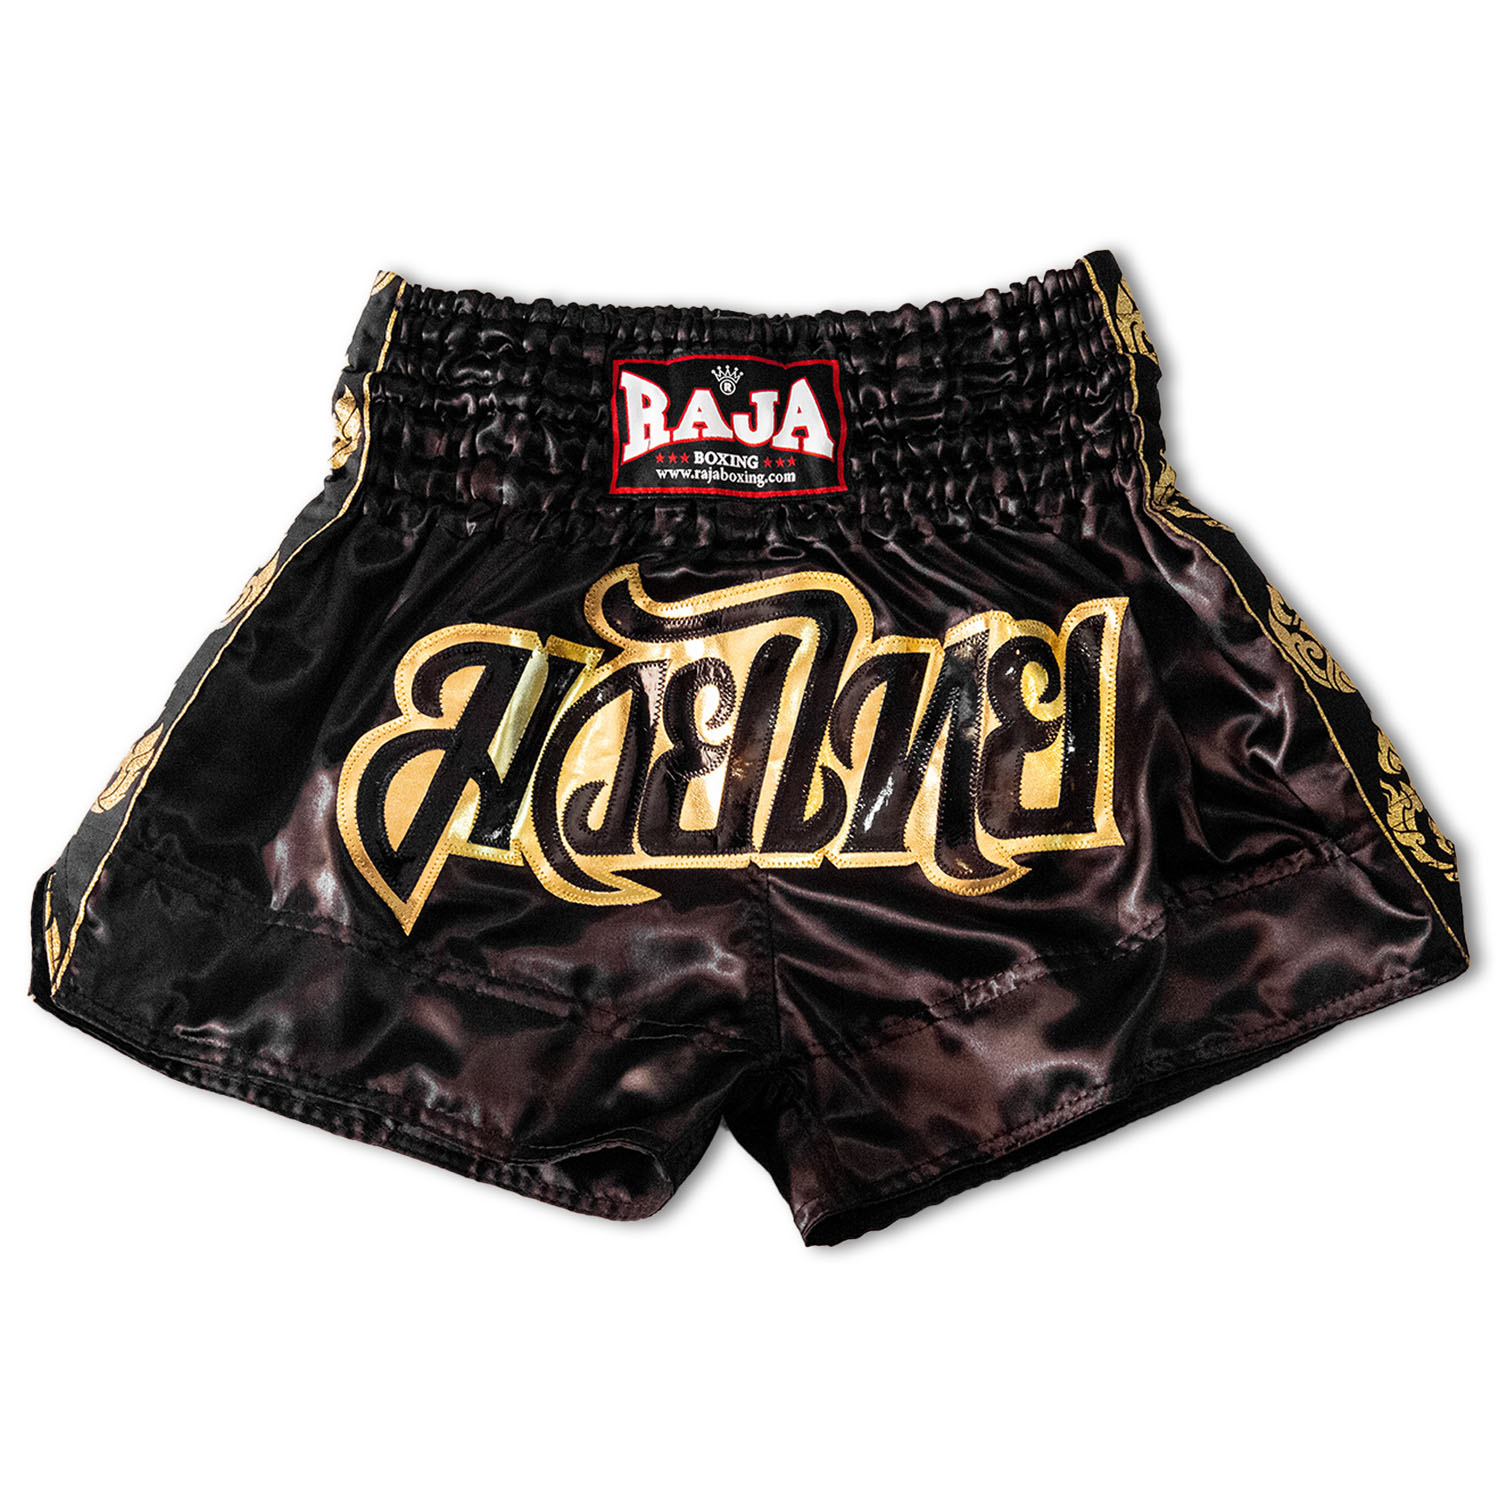 RAJA Boxing Muay Thai Shorts, Lai Thai, schwarz, XXL